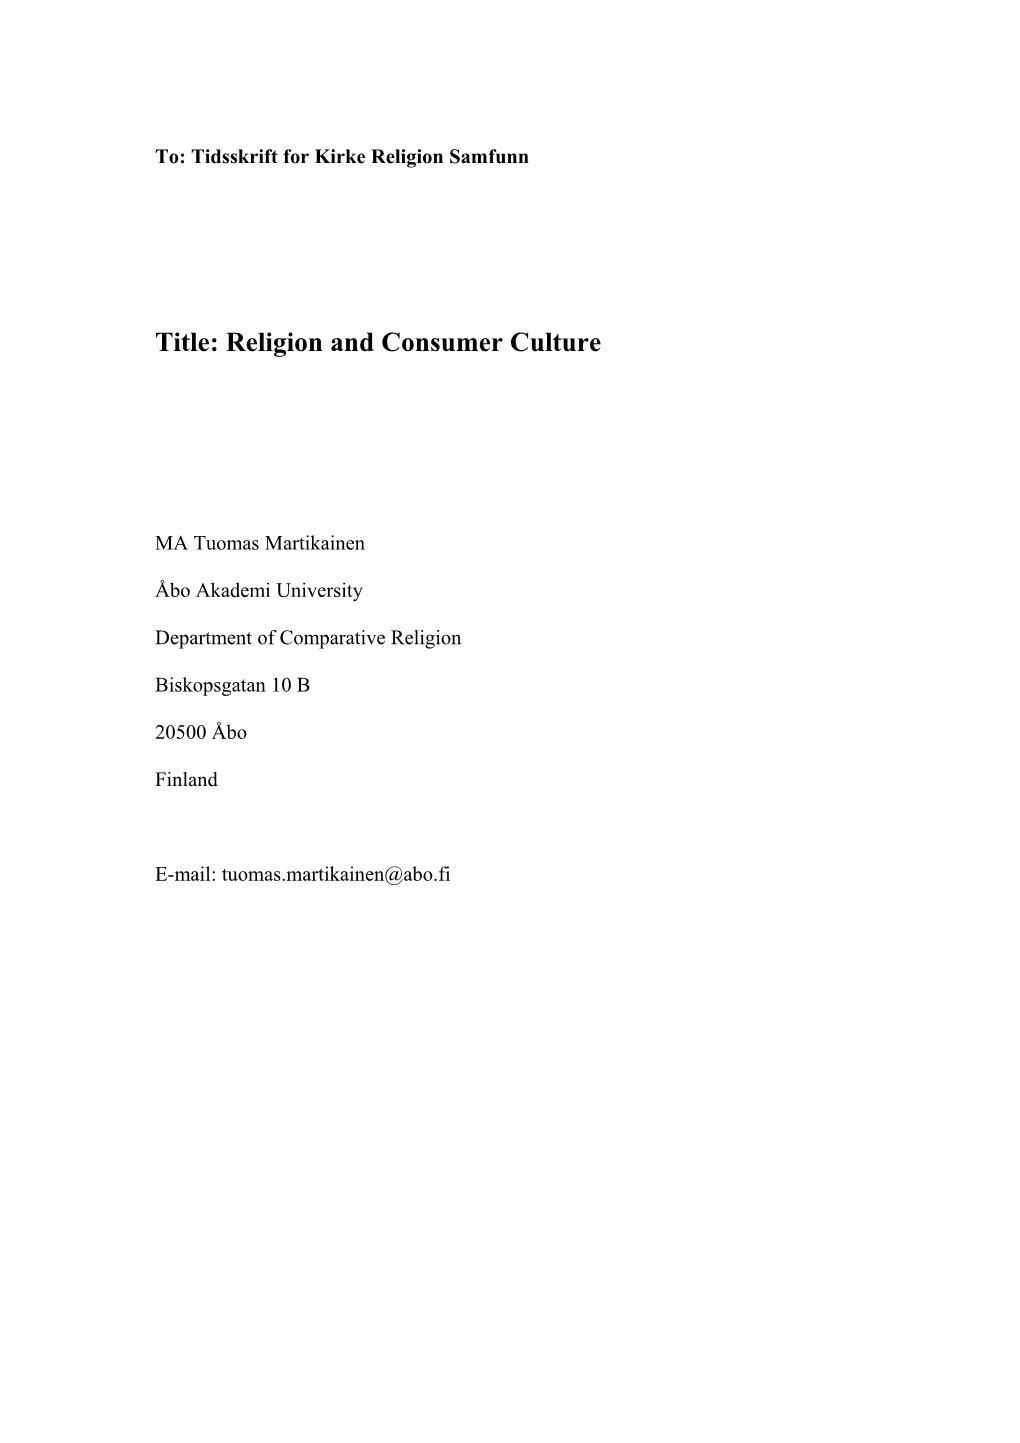 Religion and Consumer Culture